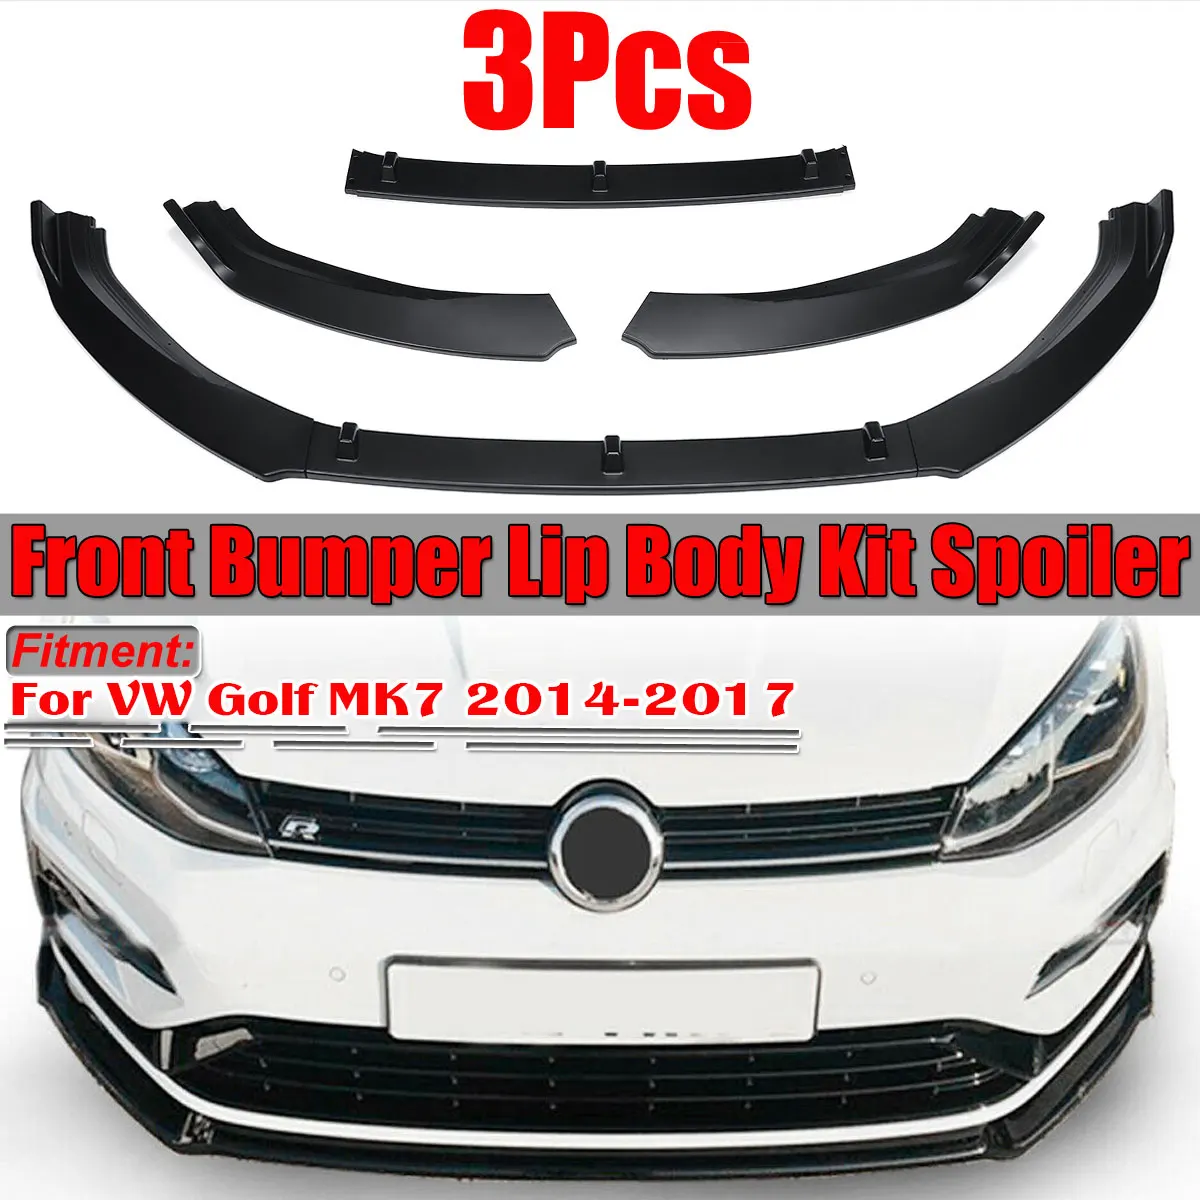 

New Carbon Fiber Look/Black Car Front Bumper Splitter Lip Spoiler Diffuser Protector Cover Guard For VW For Golf MK7 2014-2017